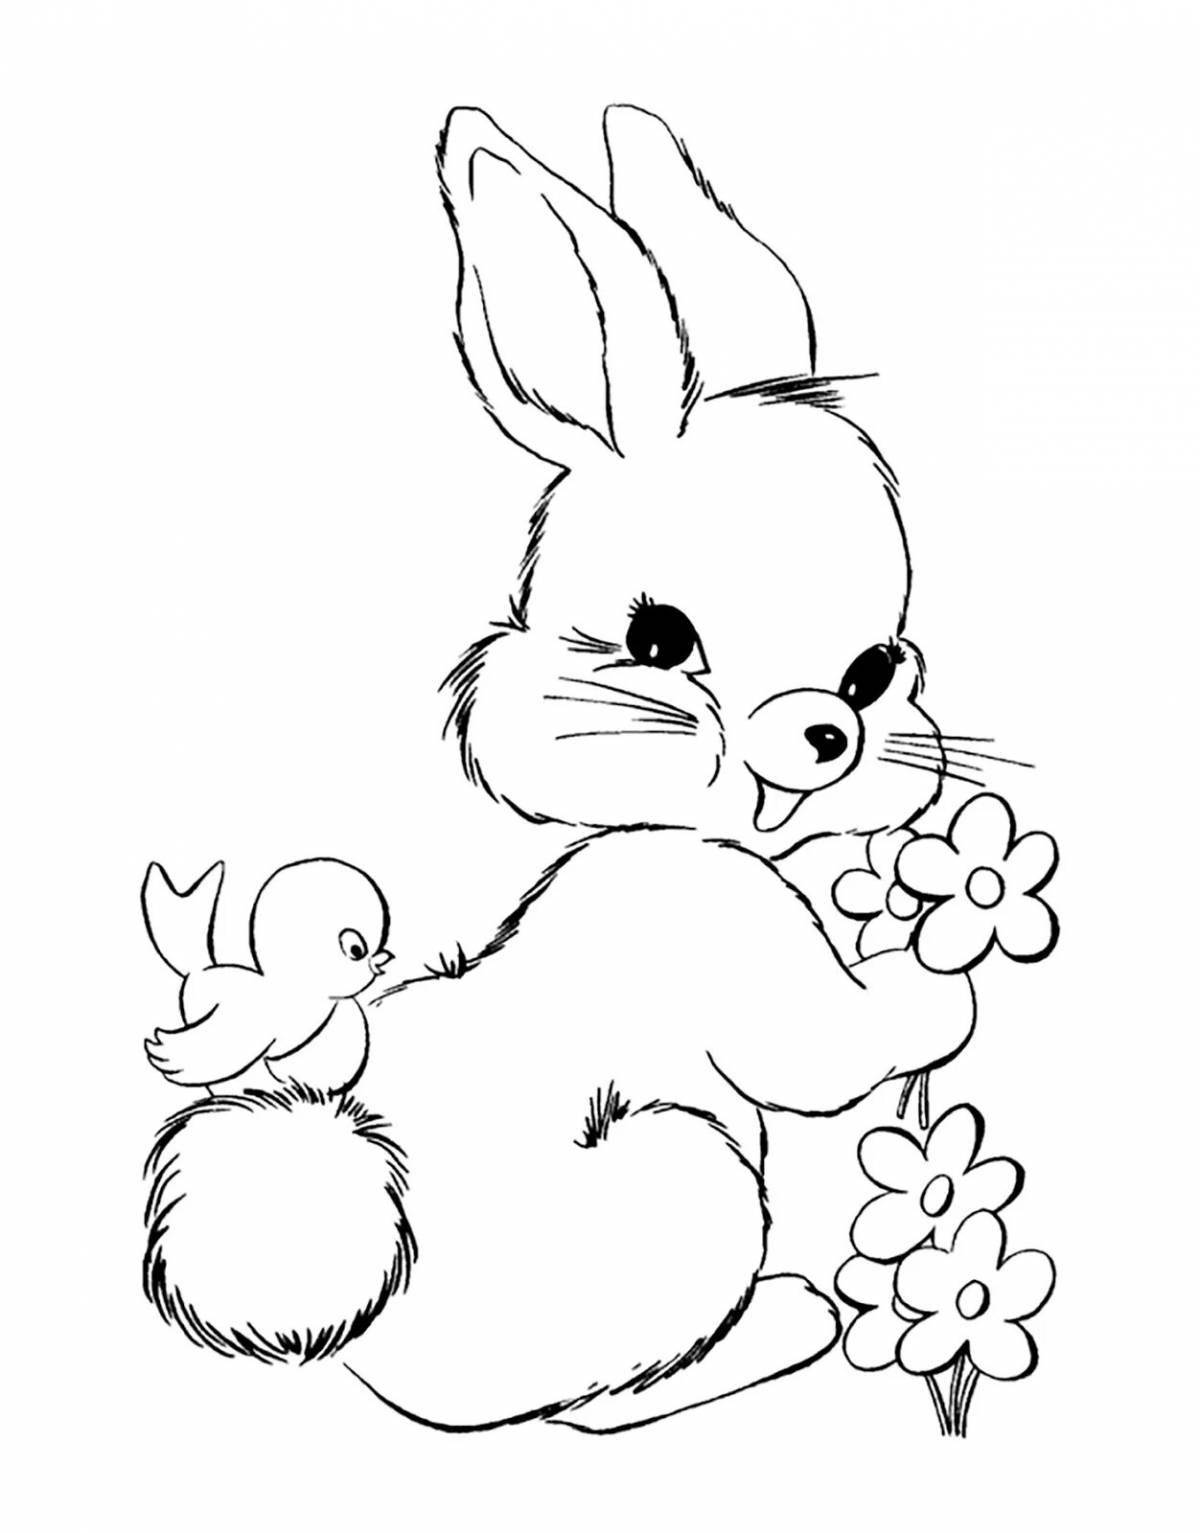 Little rabbits #3